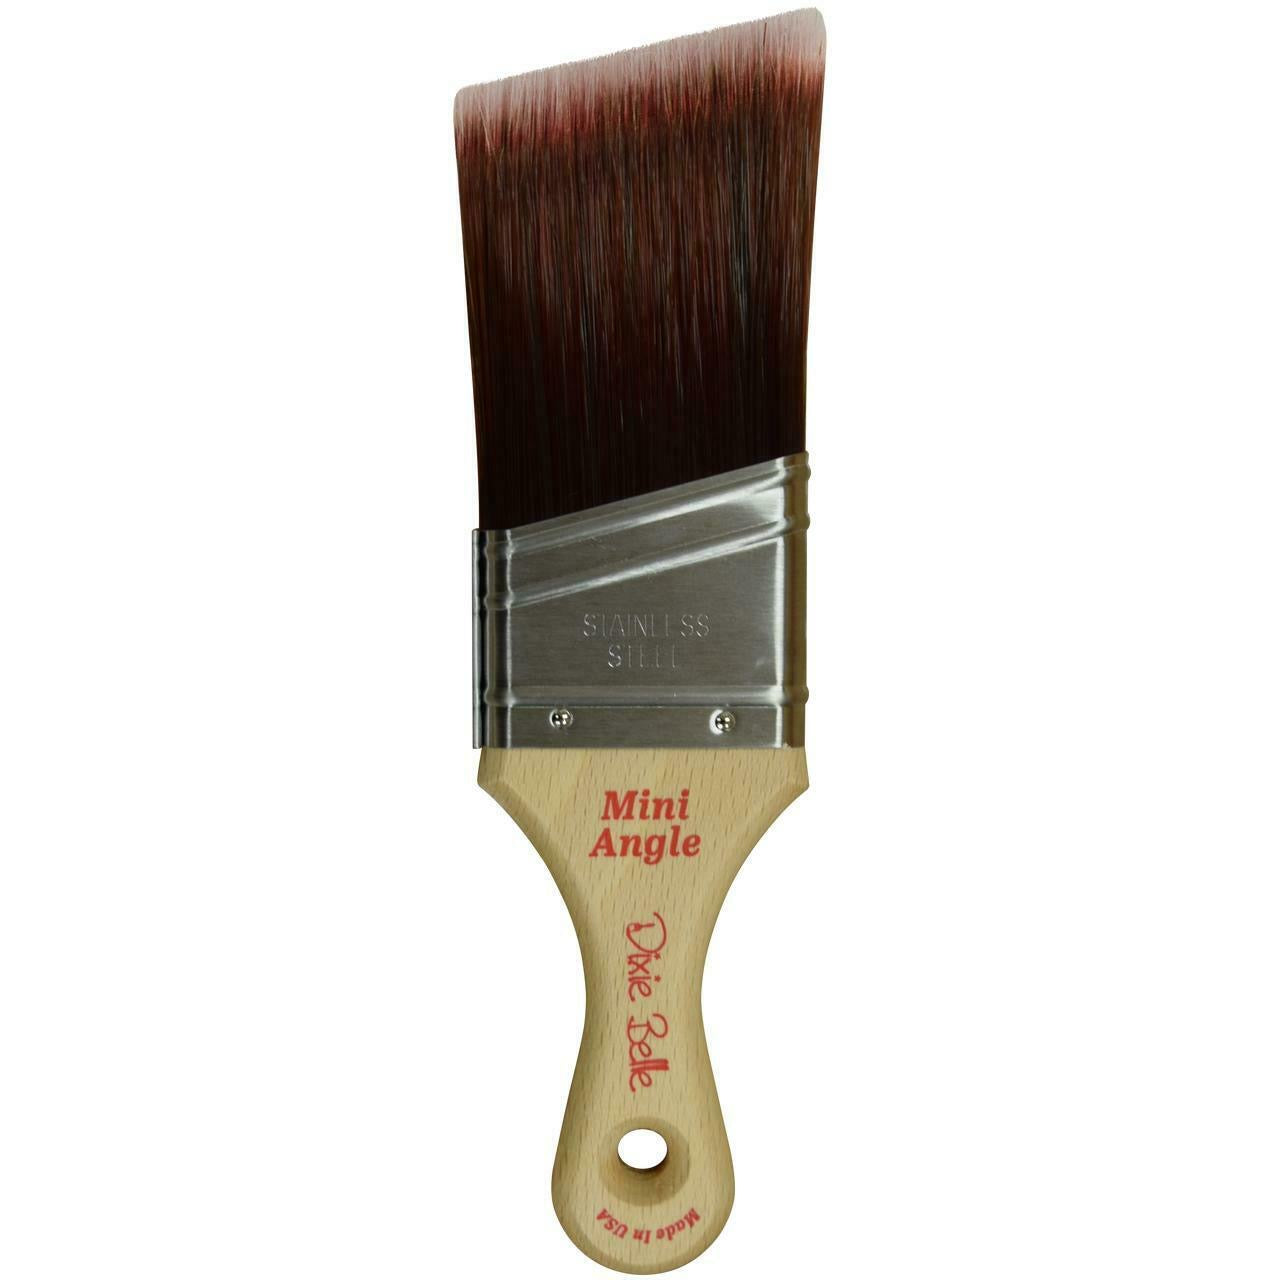 Dixie Belle synthetic mini angle paint brush